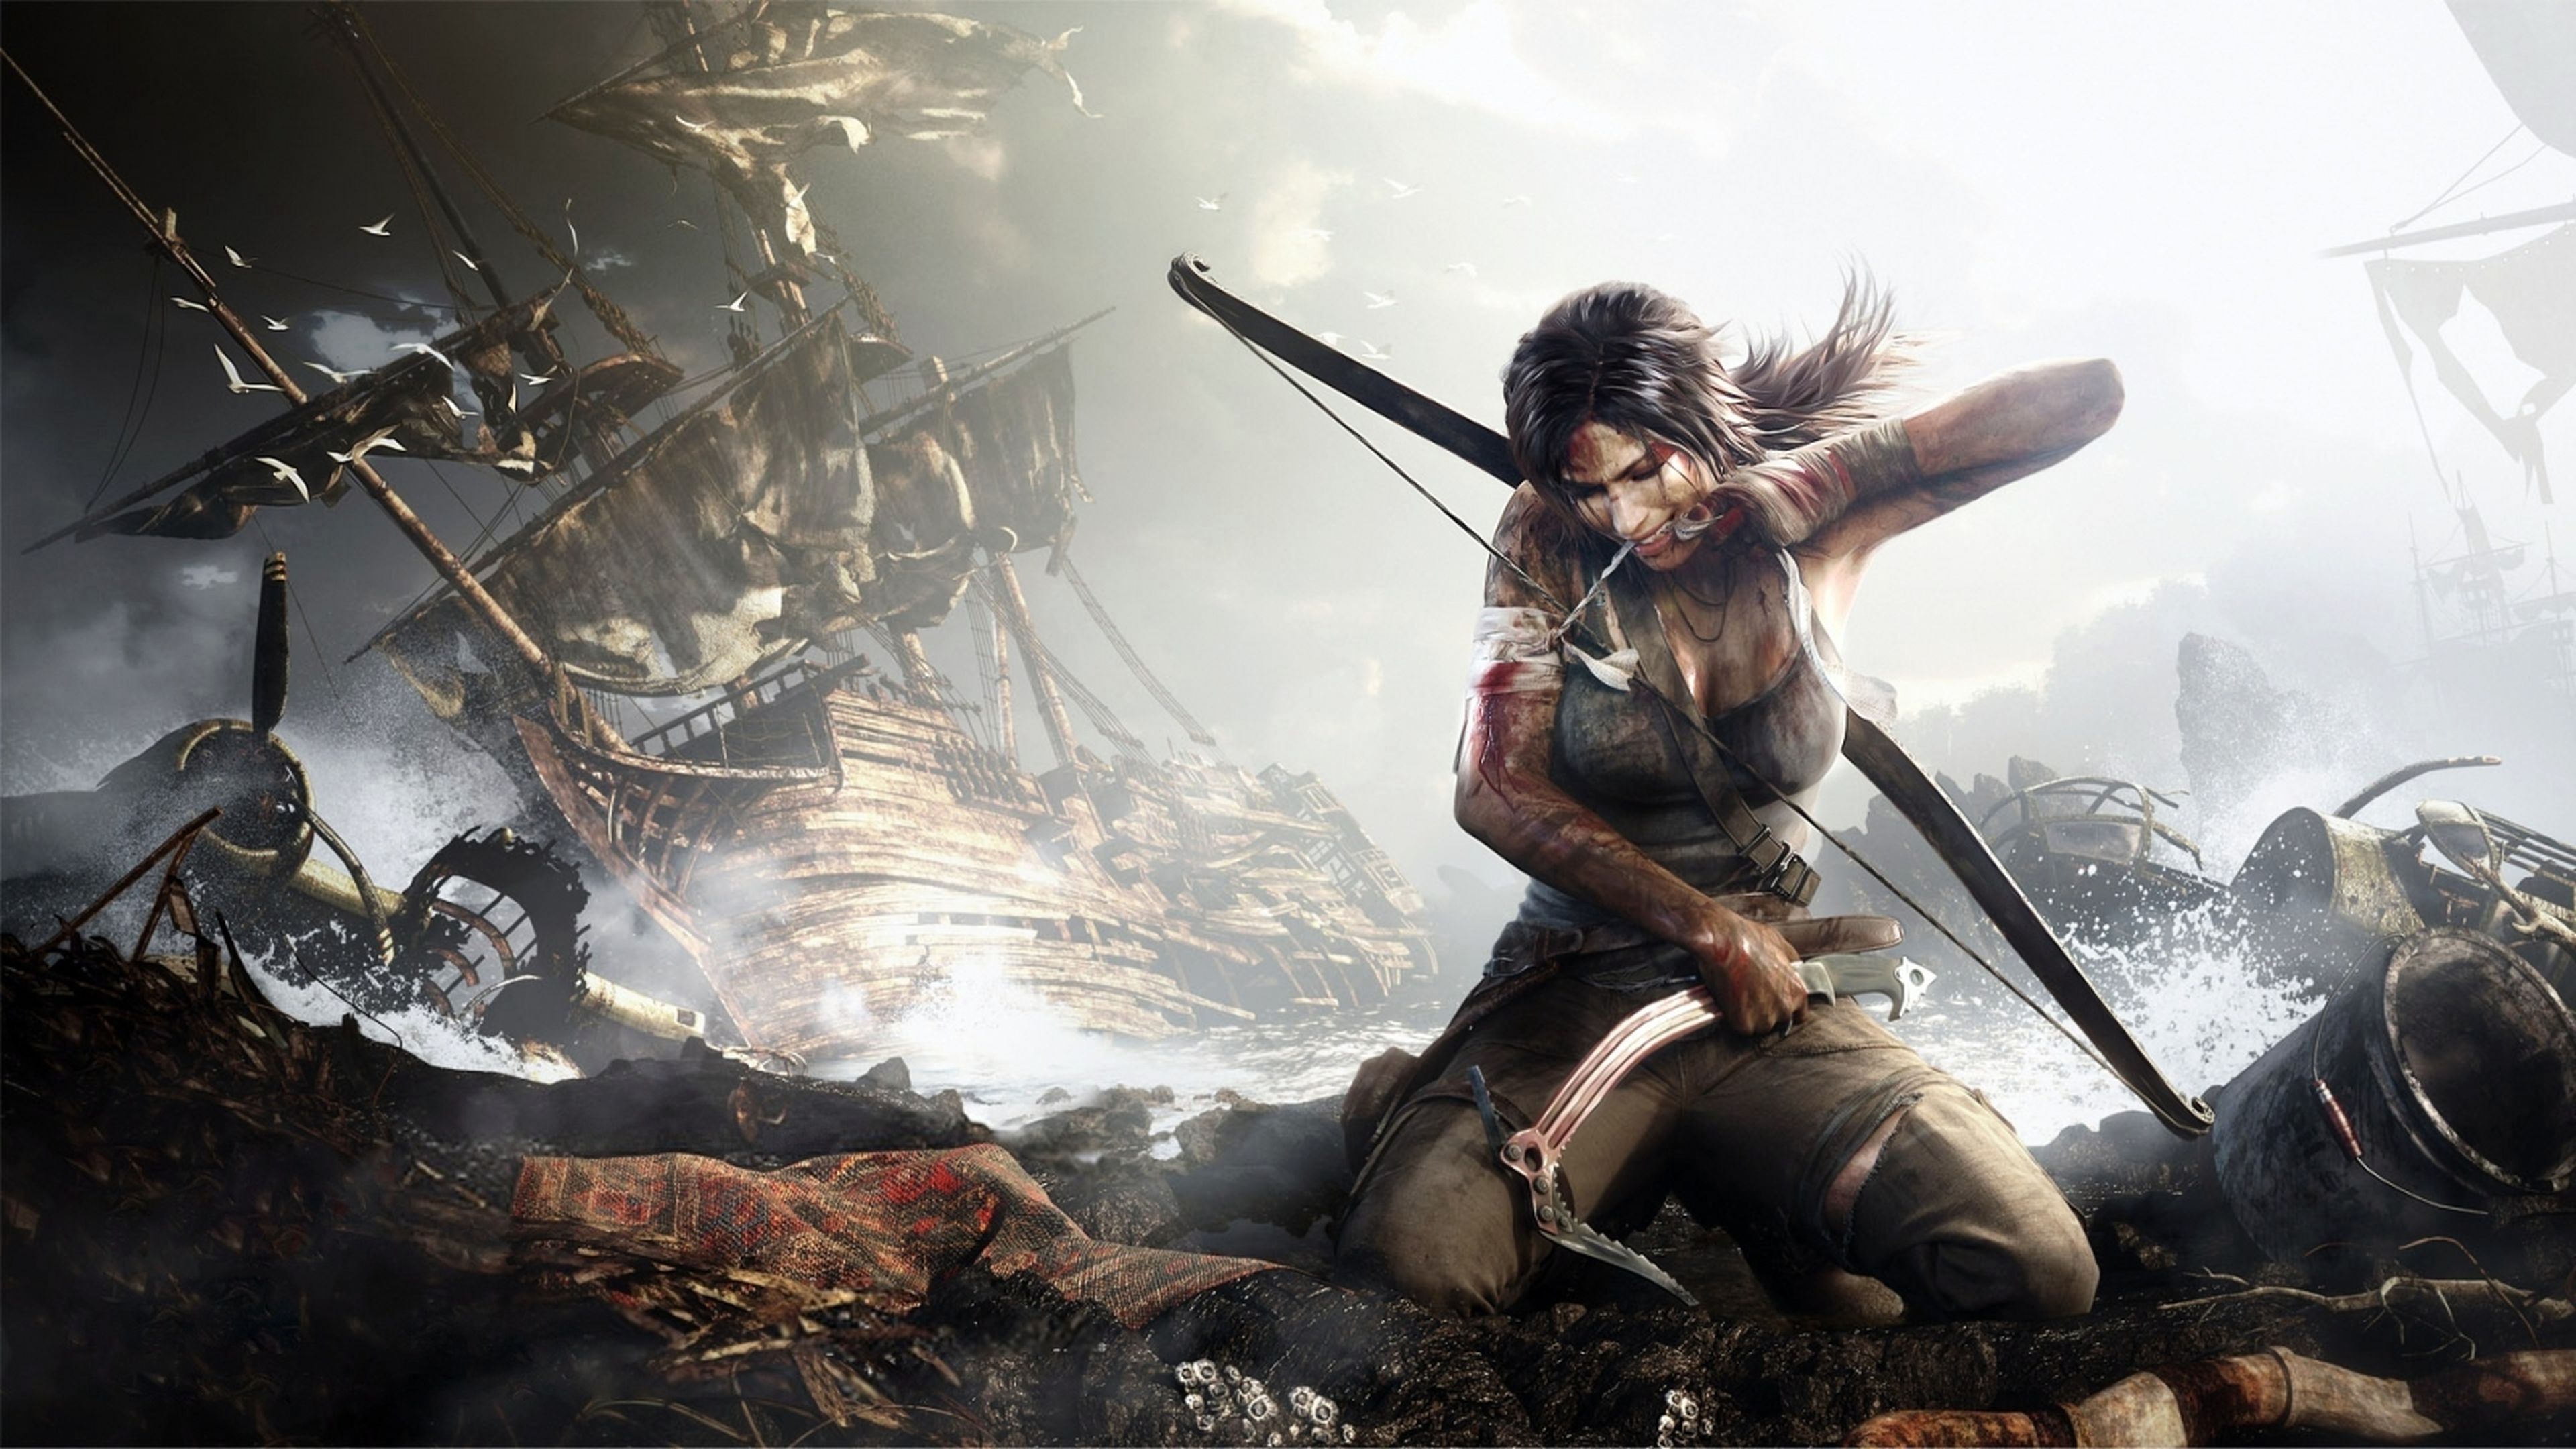 Amazon Italia lista Tomb Raider en PS4